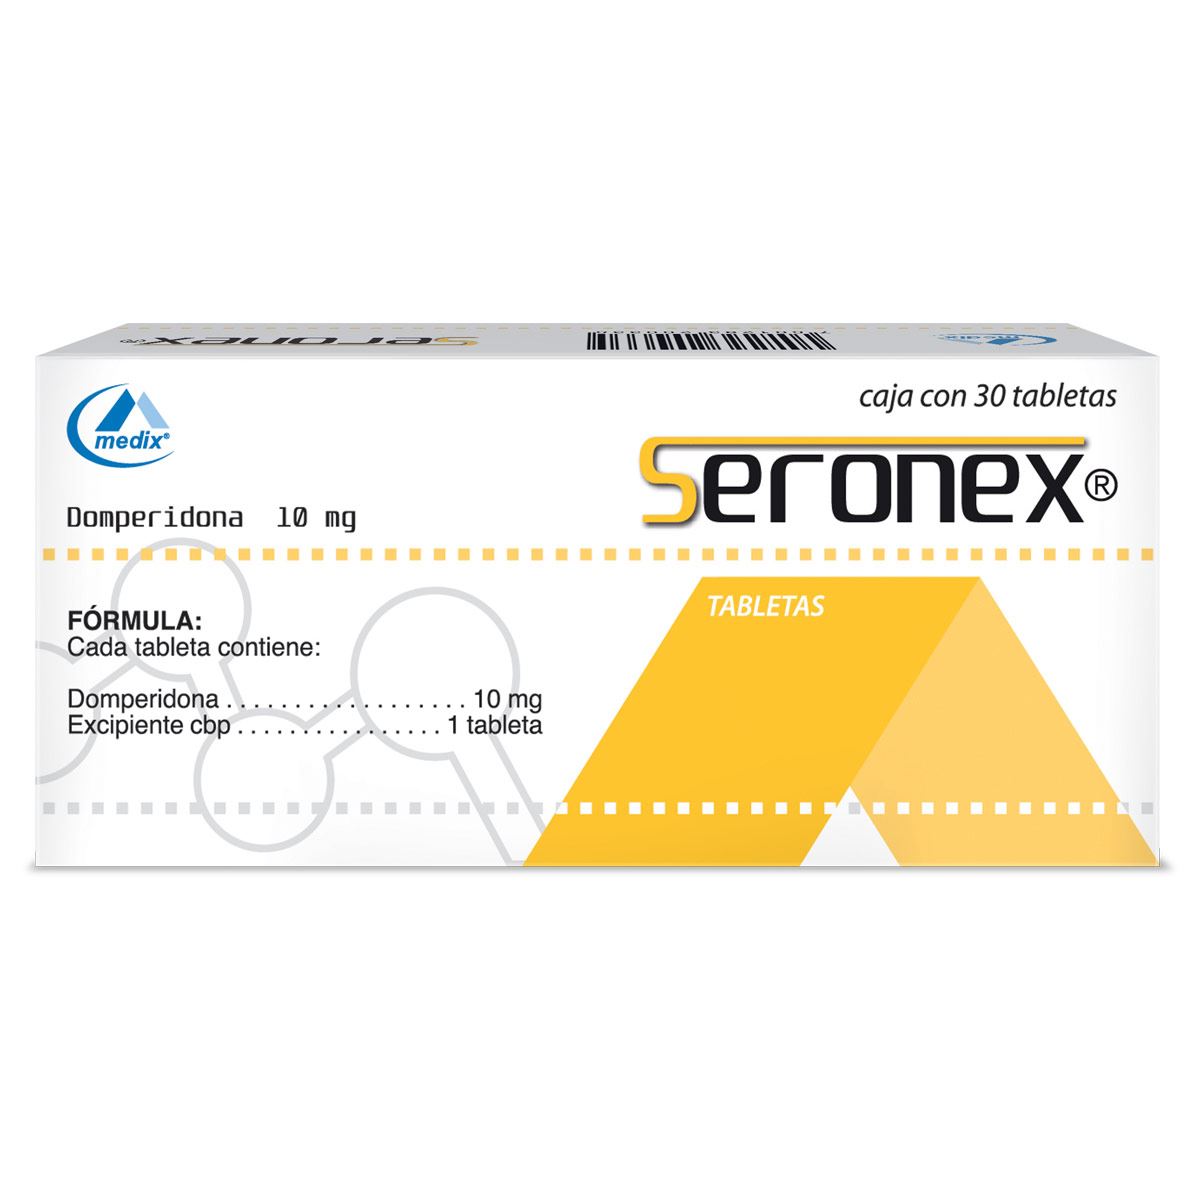 Seronex® caja con 30 tabletas 10 mg. Domperidona